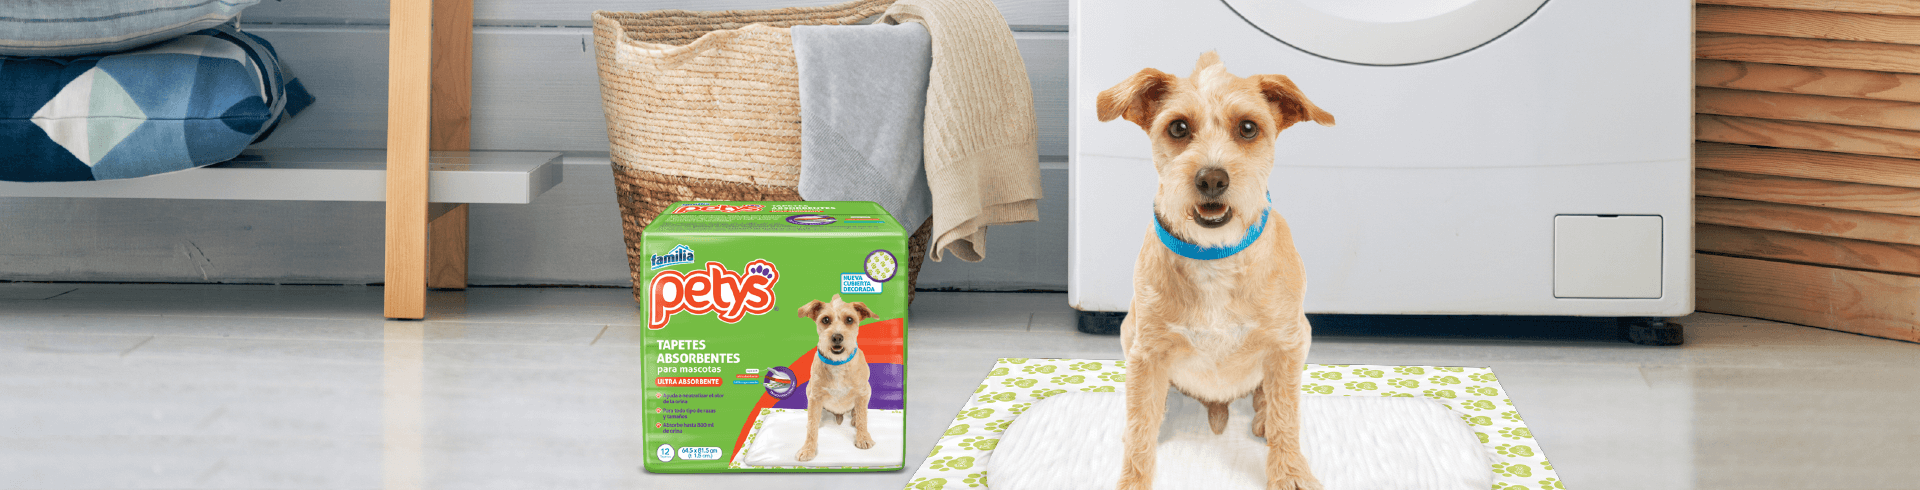 5 pasos para enseñarle a usar los tapetes a mi mascota  - Petys